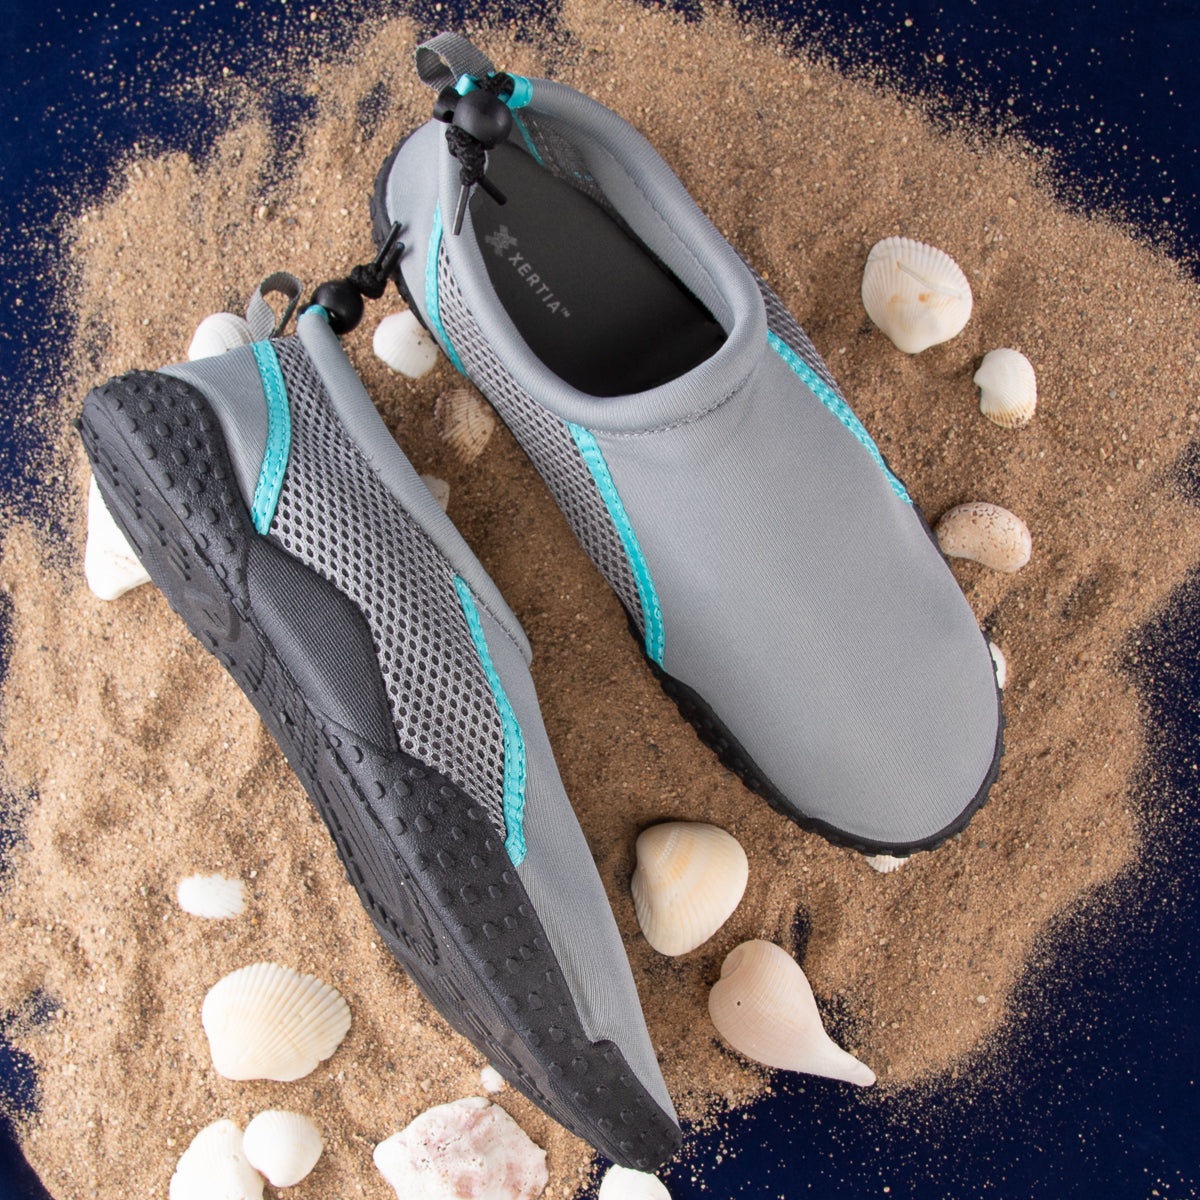 Xertia Men's Water Shoes – Safe & Comfortable For Beach & Pool